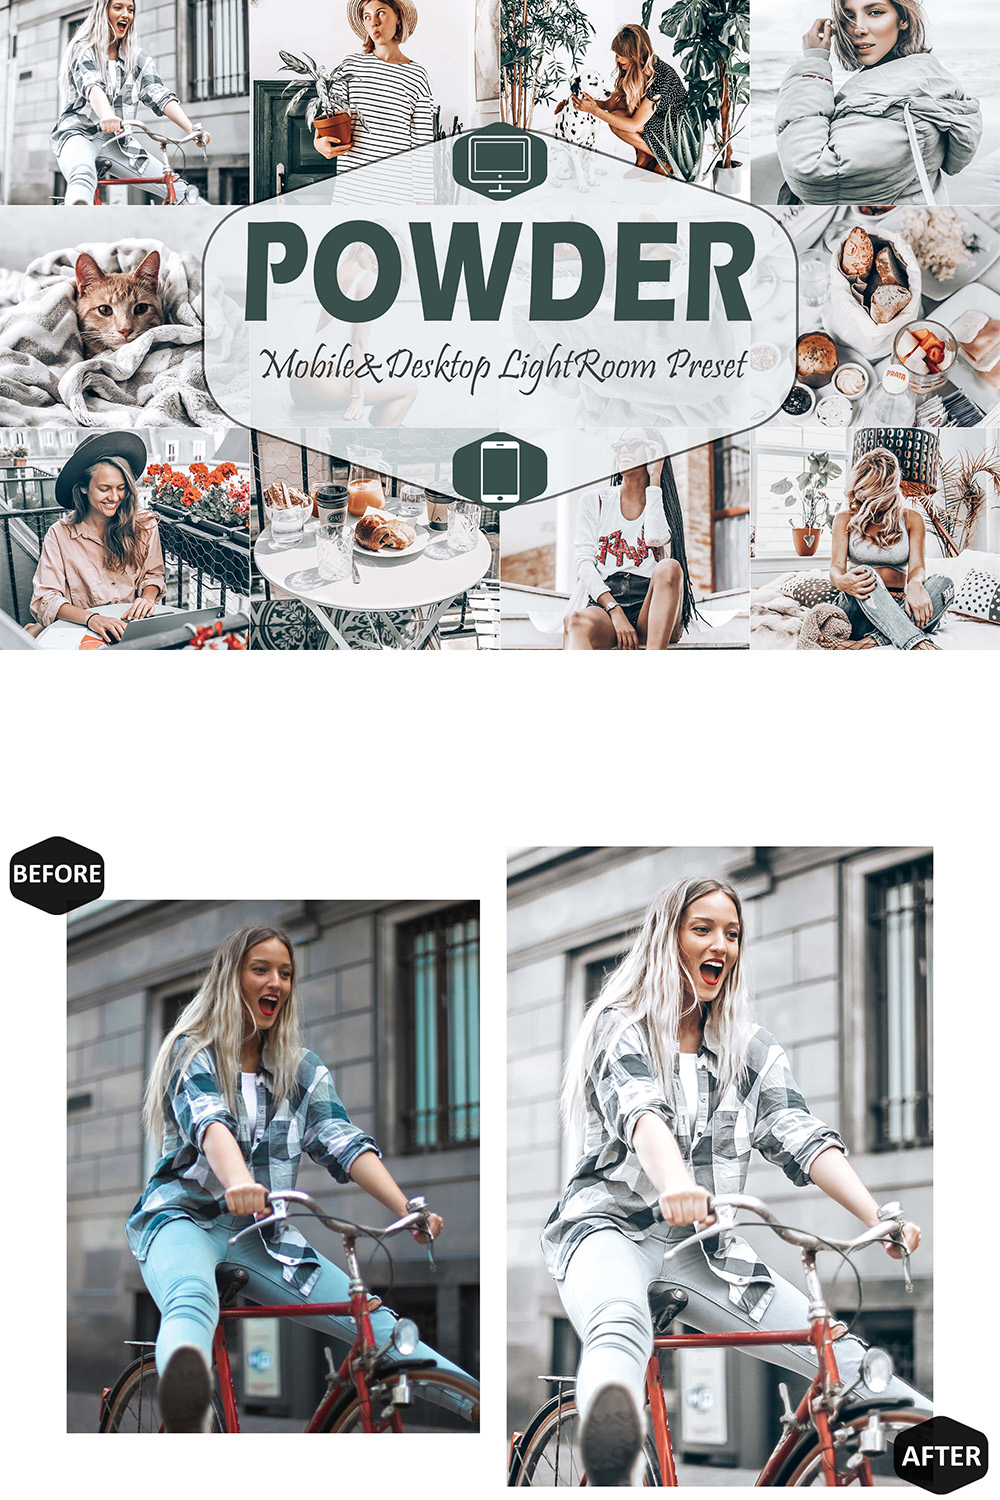 10 Powder Mobile & Desktop Lightroom Presets, gray bright Filter LR preset, Portrait, DNG Lifestyle Blogger Photographer Instagram Theme pinterest preview image.